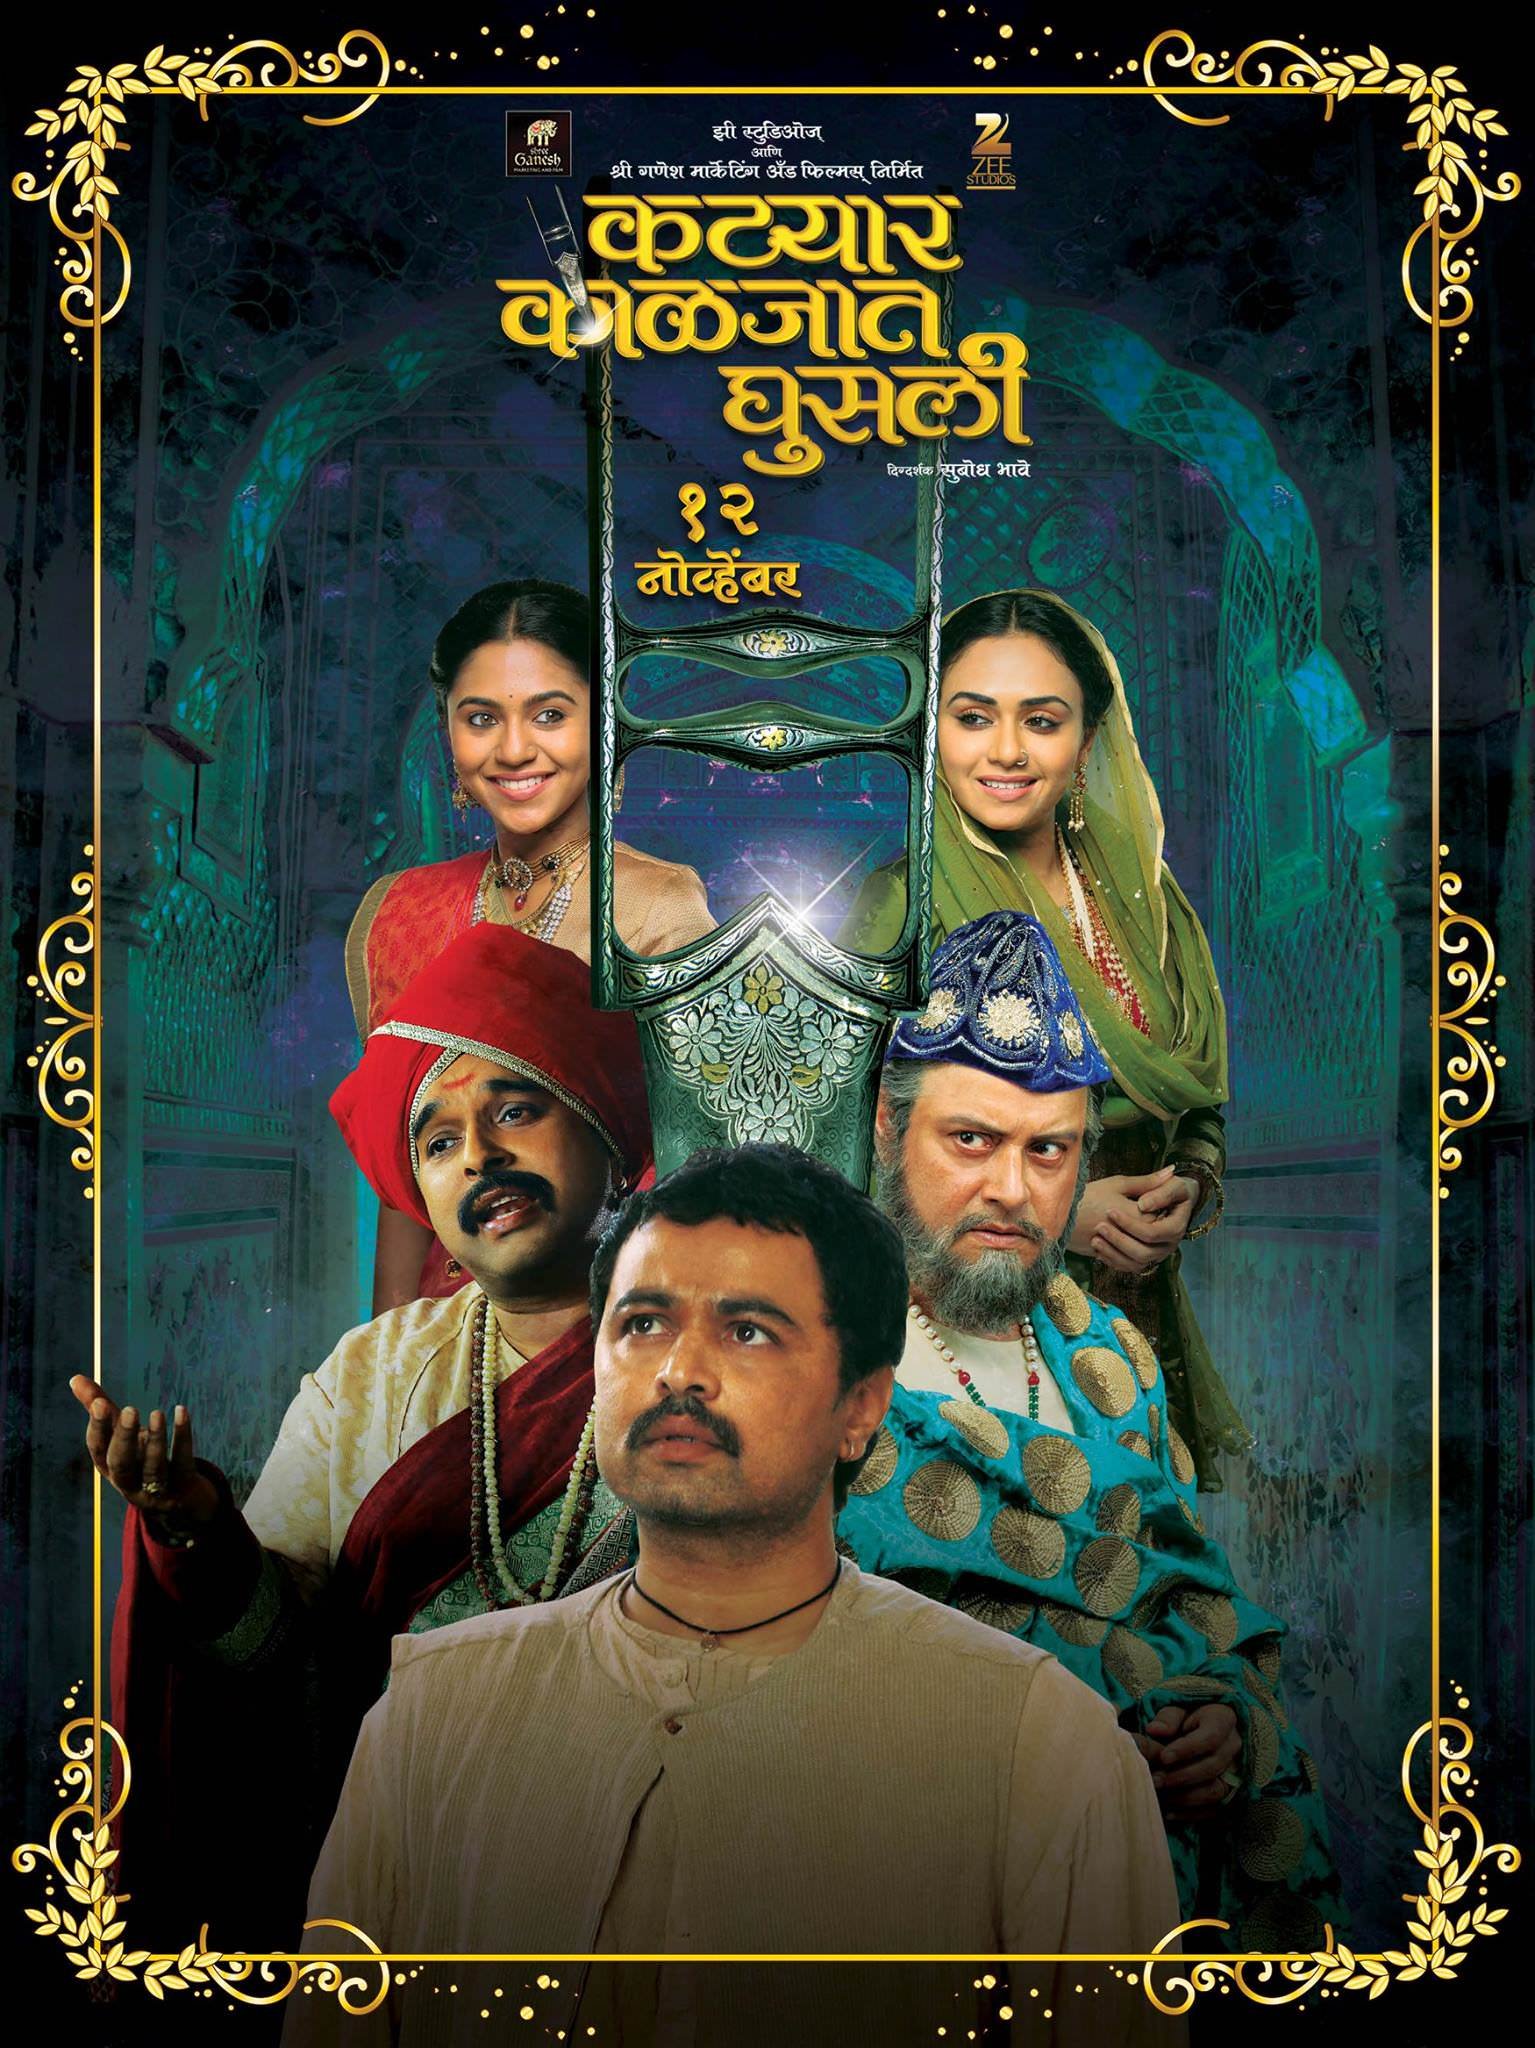 Marathi poster of the movie Katyar Kaljat Ghusali